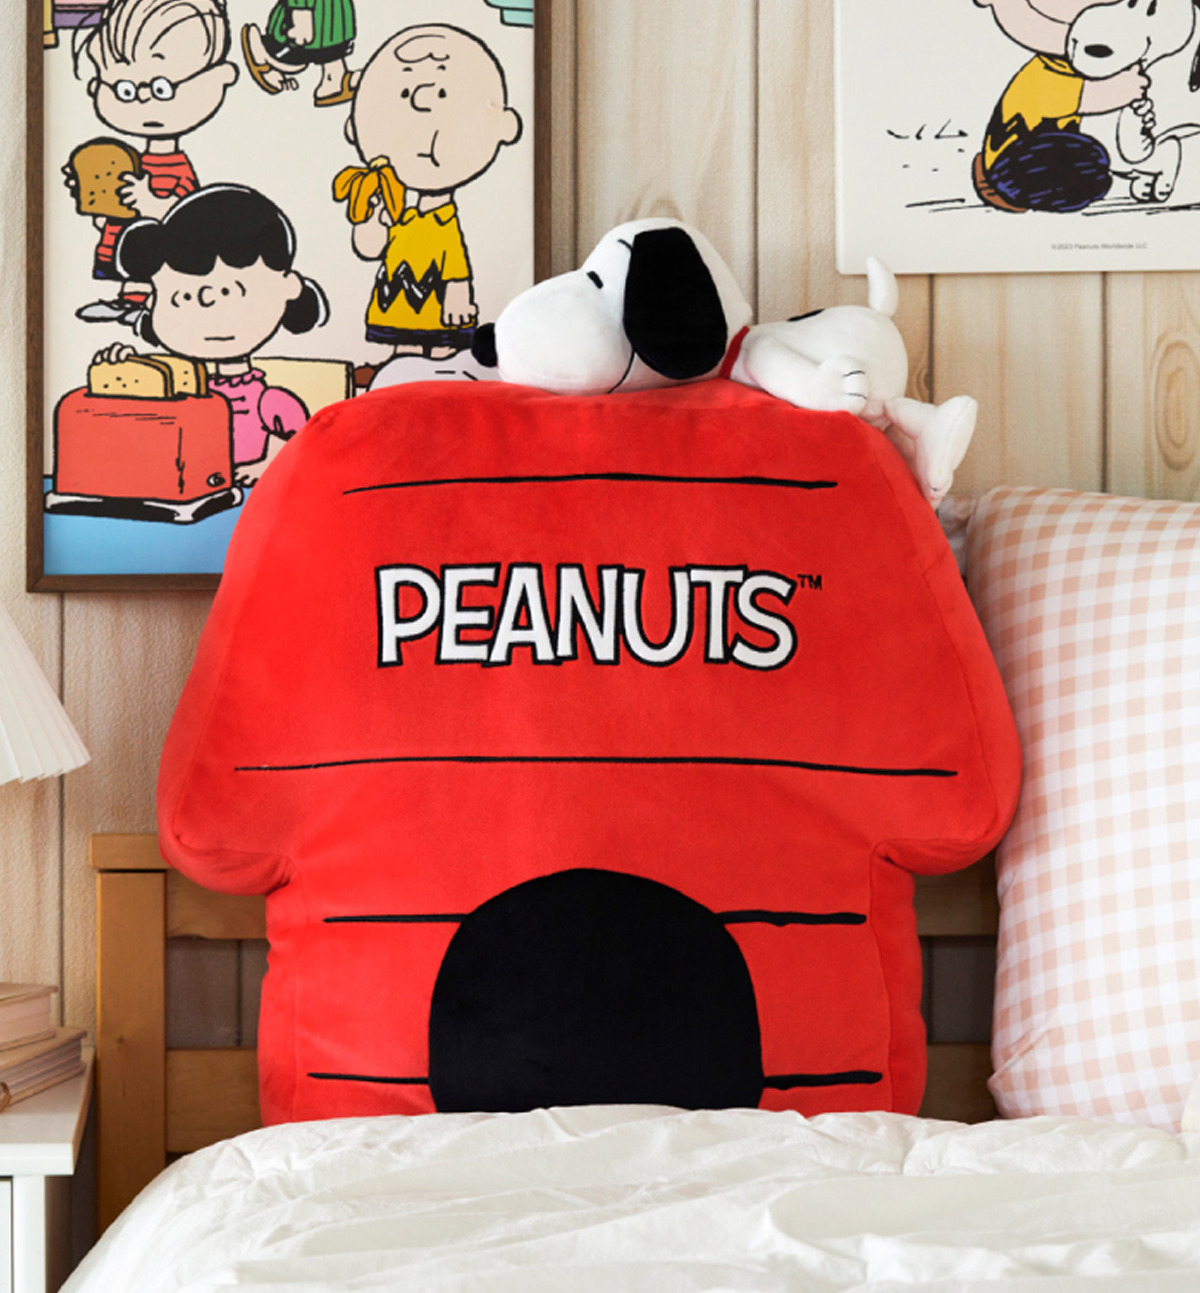 Peanuts Face Cushion [Snoopy's House]